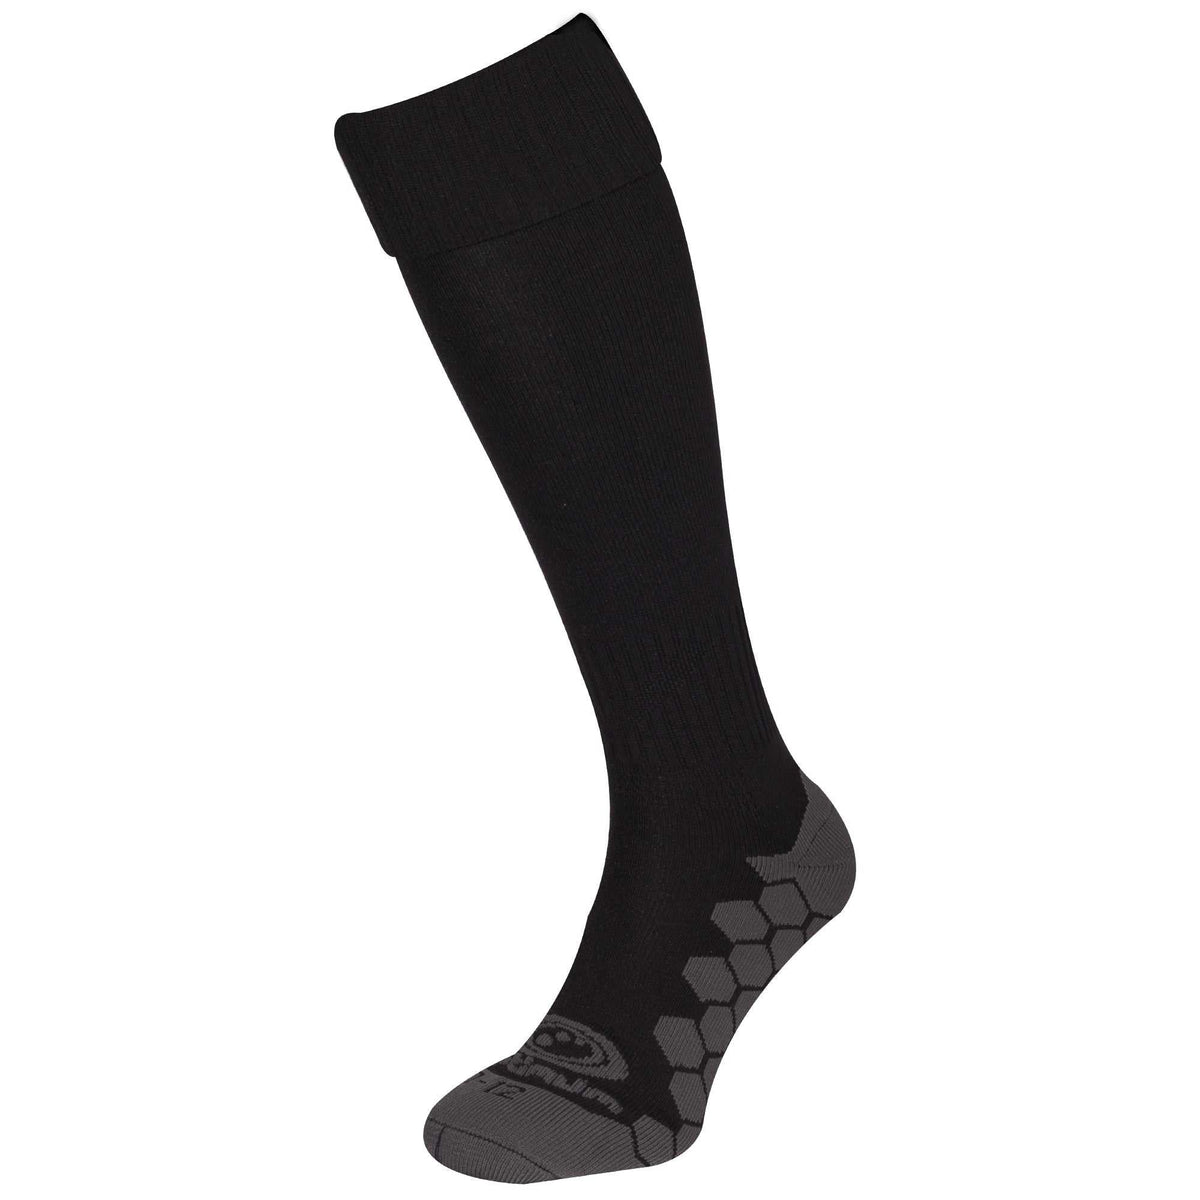 Wheatley Hills R.U.F.C Black Socks - Optimum